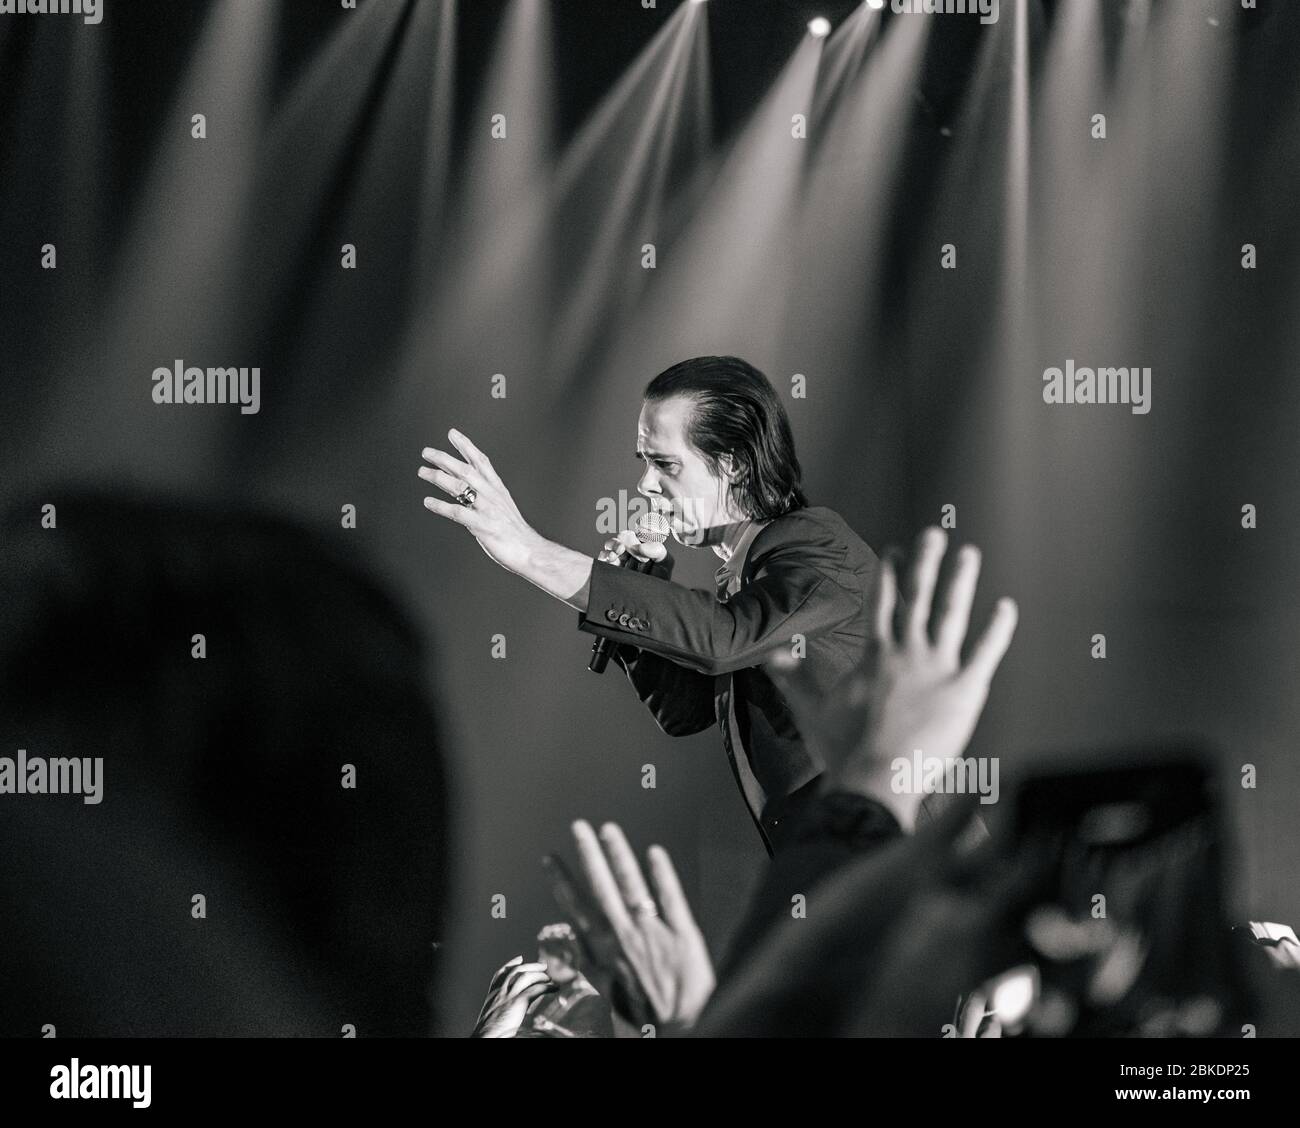 Nick Cave at Belgrade, Serbia 2017 Stock Photo - Alamy